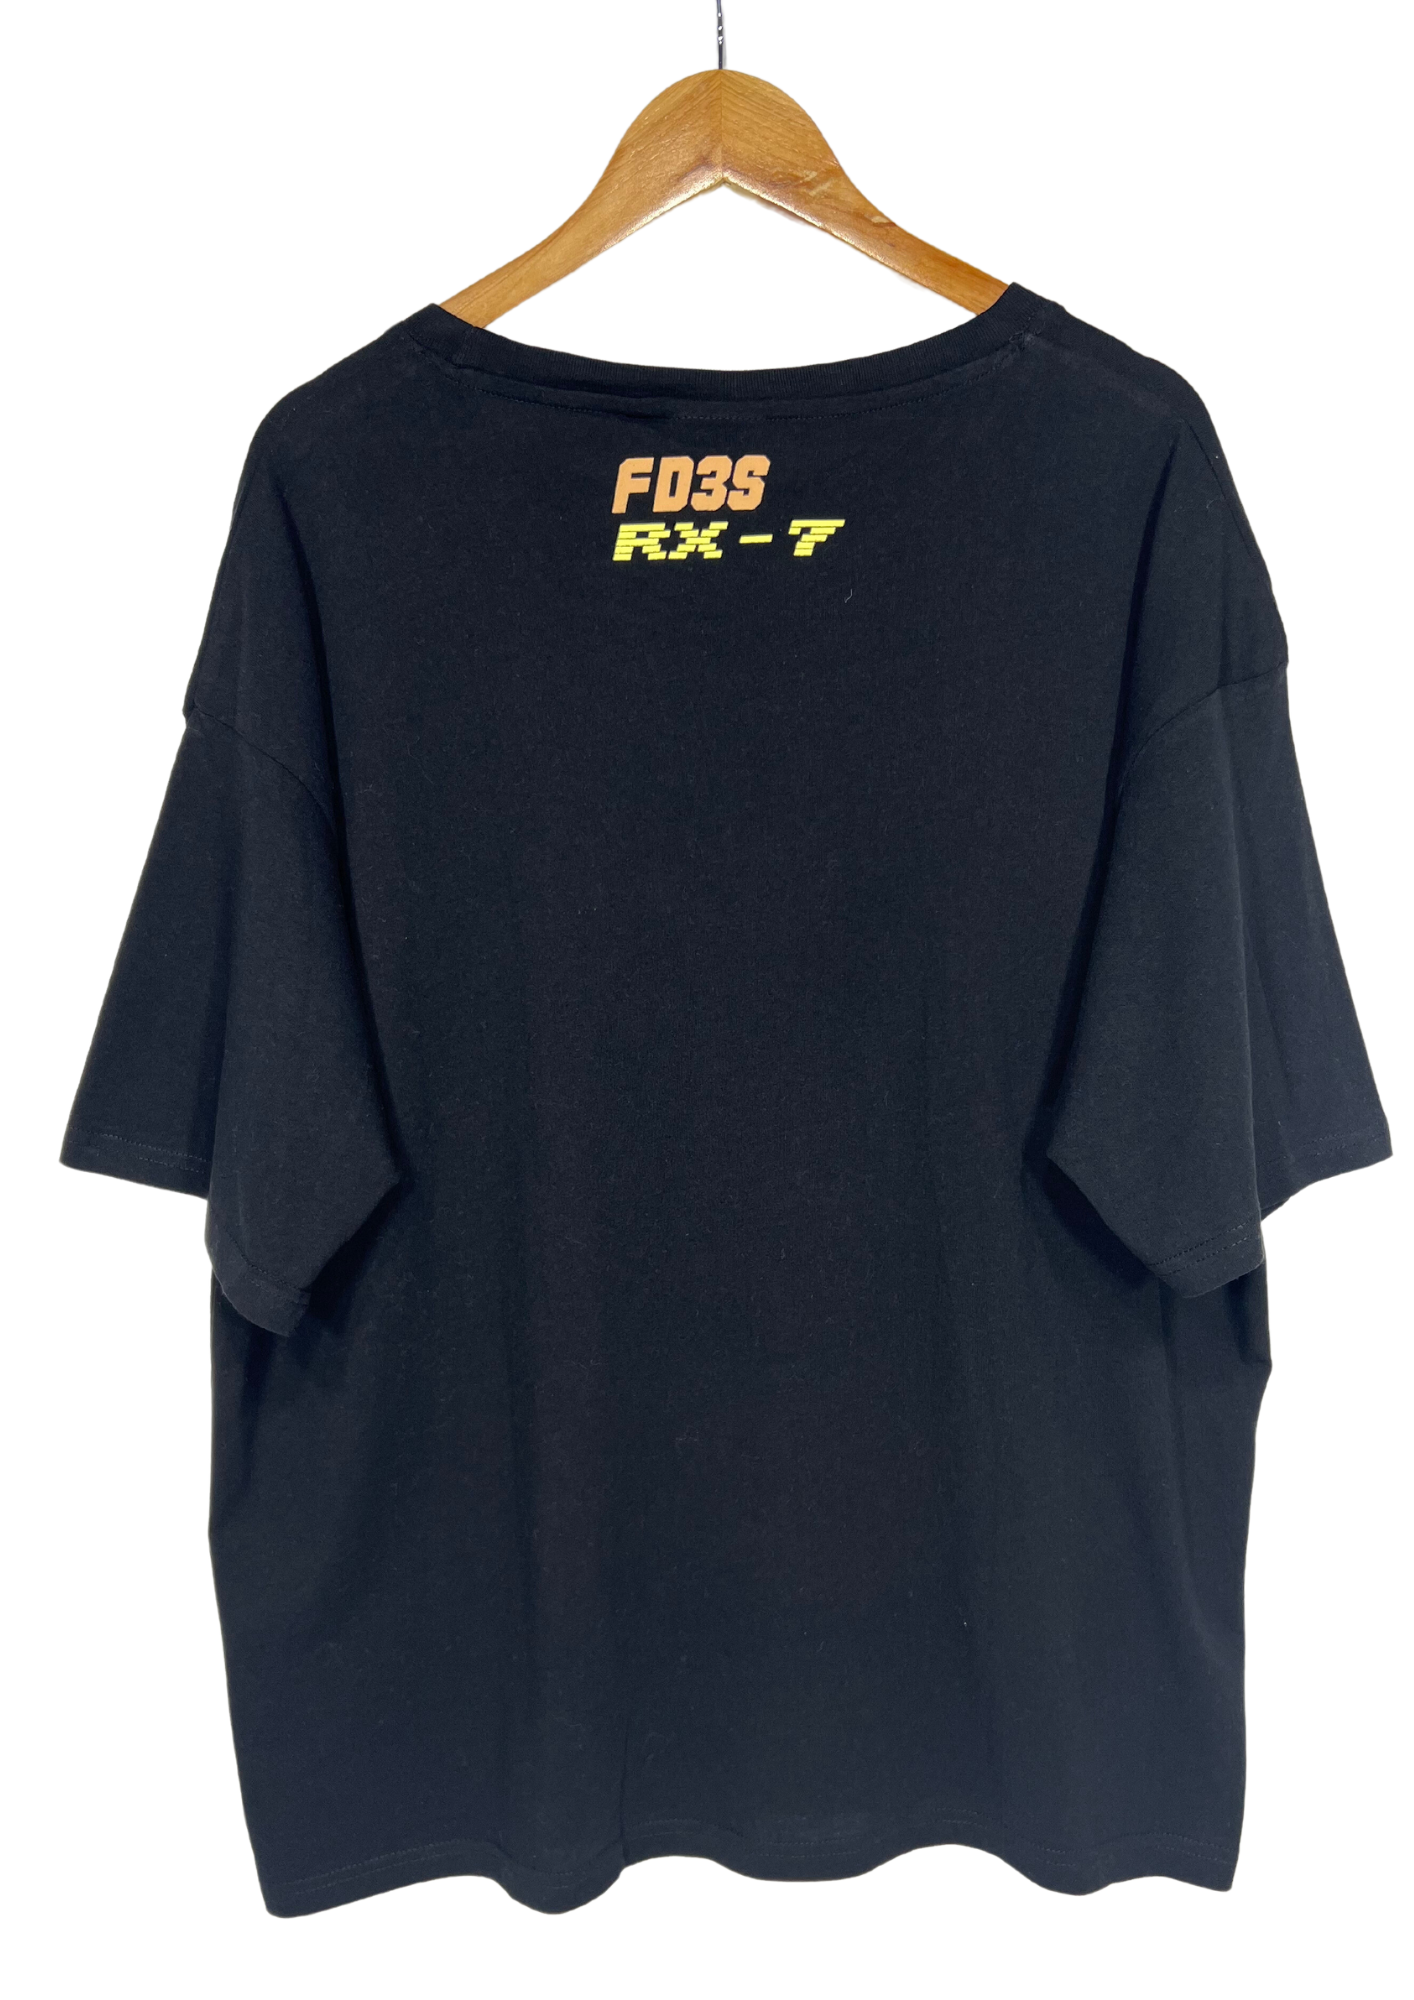 Initial D x AVAIL FD3S RX-7 T-shirt